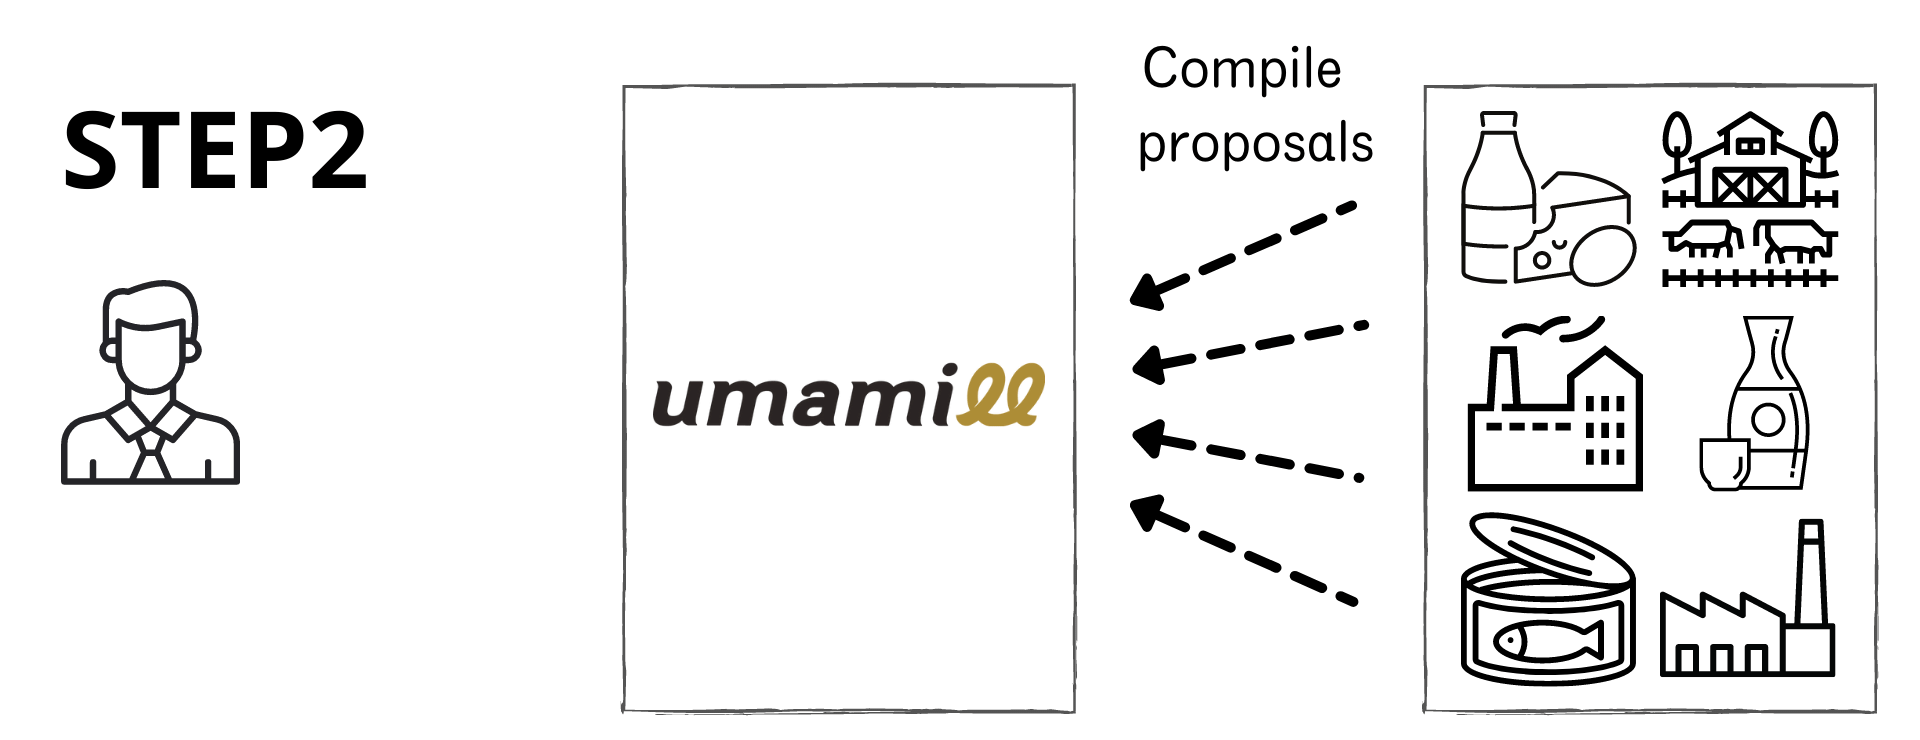 Compile proposals